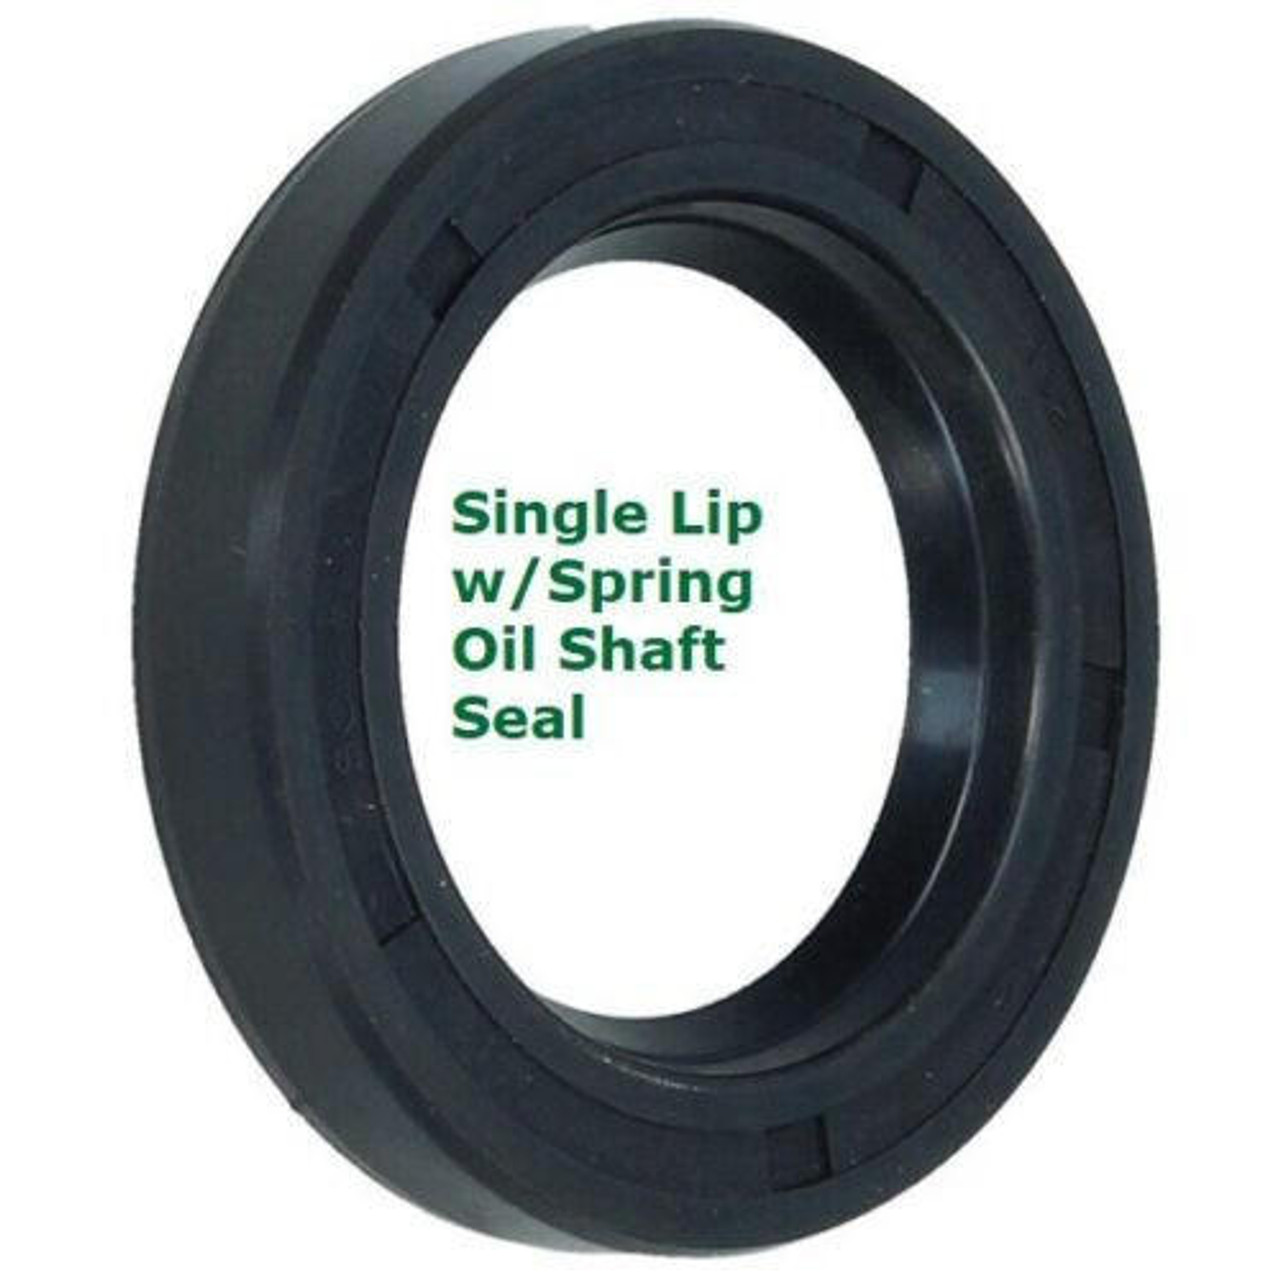 Metric Oil Shaft Seal 145 x 185 x 15mm   Single Lip   Price for 1 pc